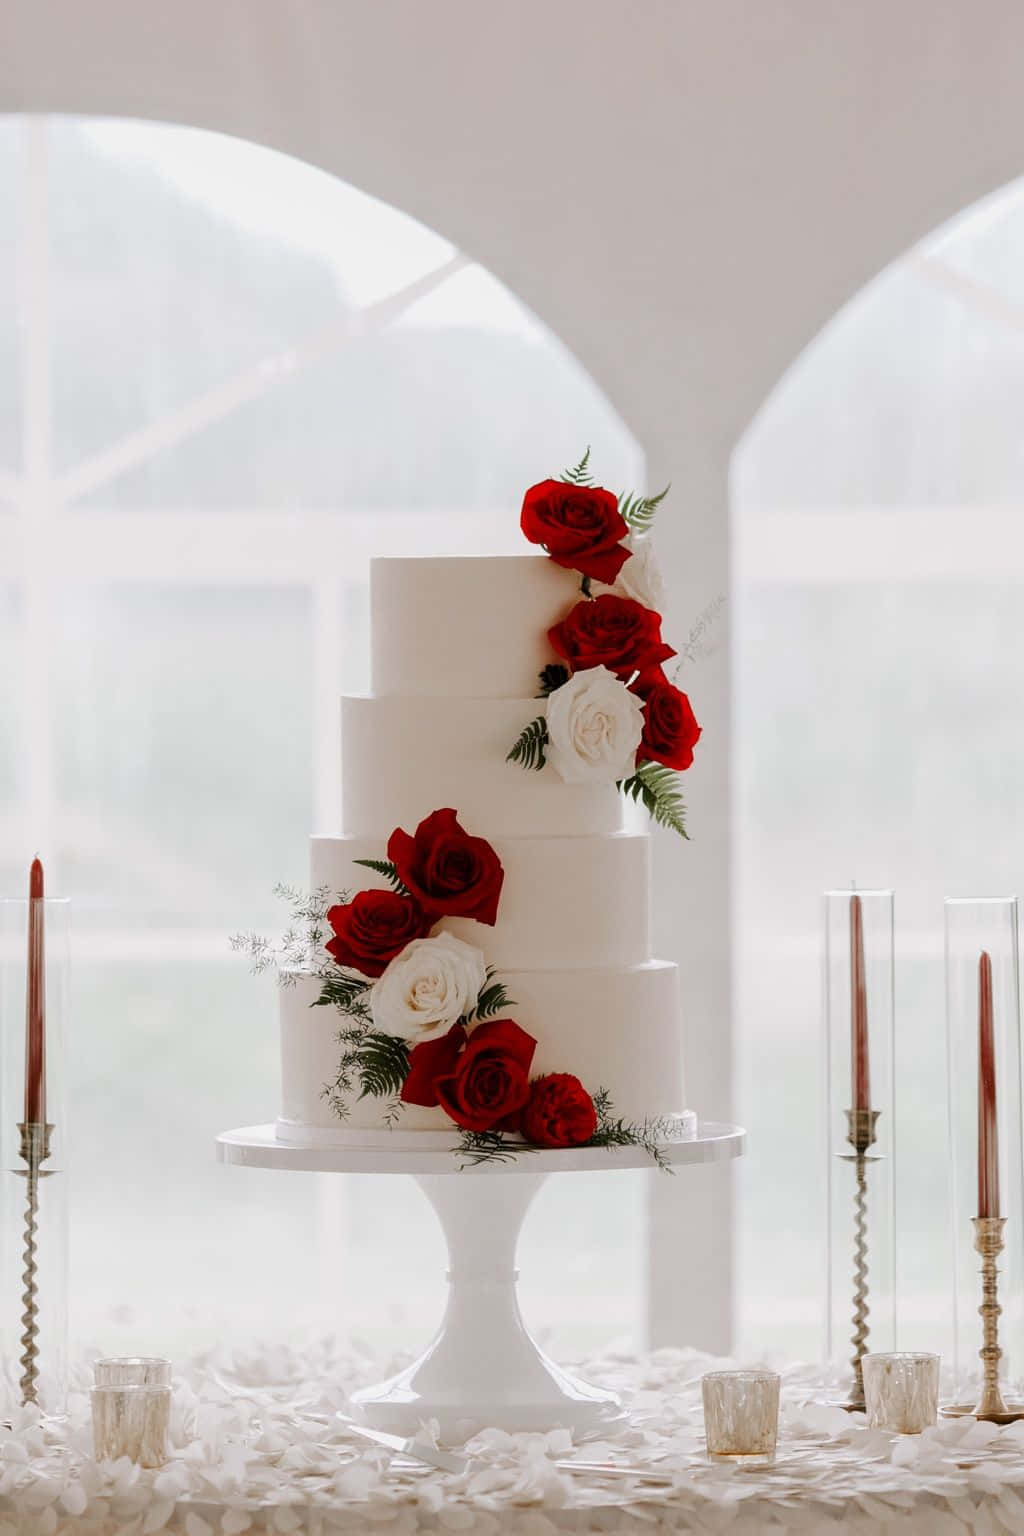 Caption: Elegant Roses Wedding Arrangement Wallpaper